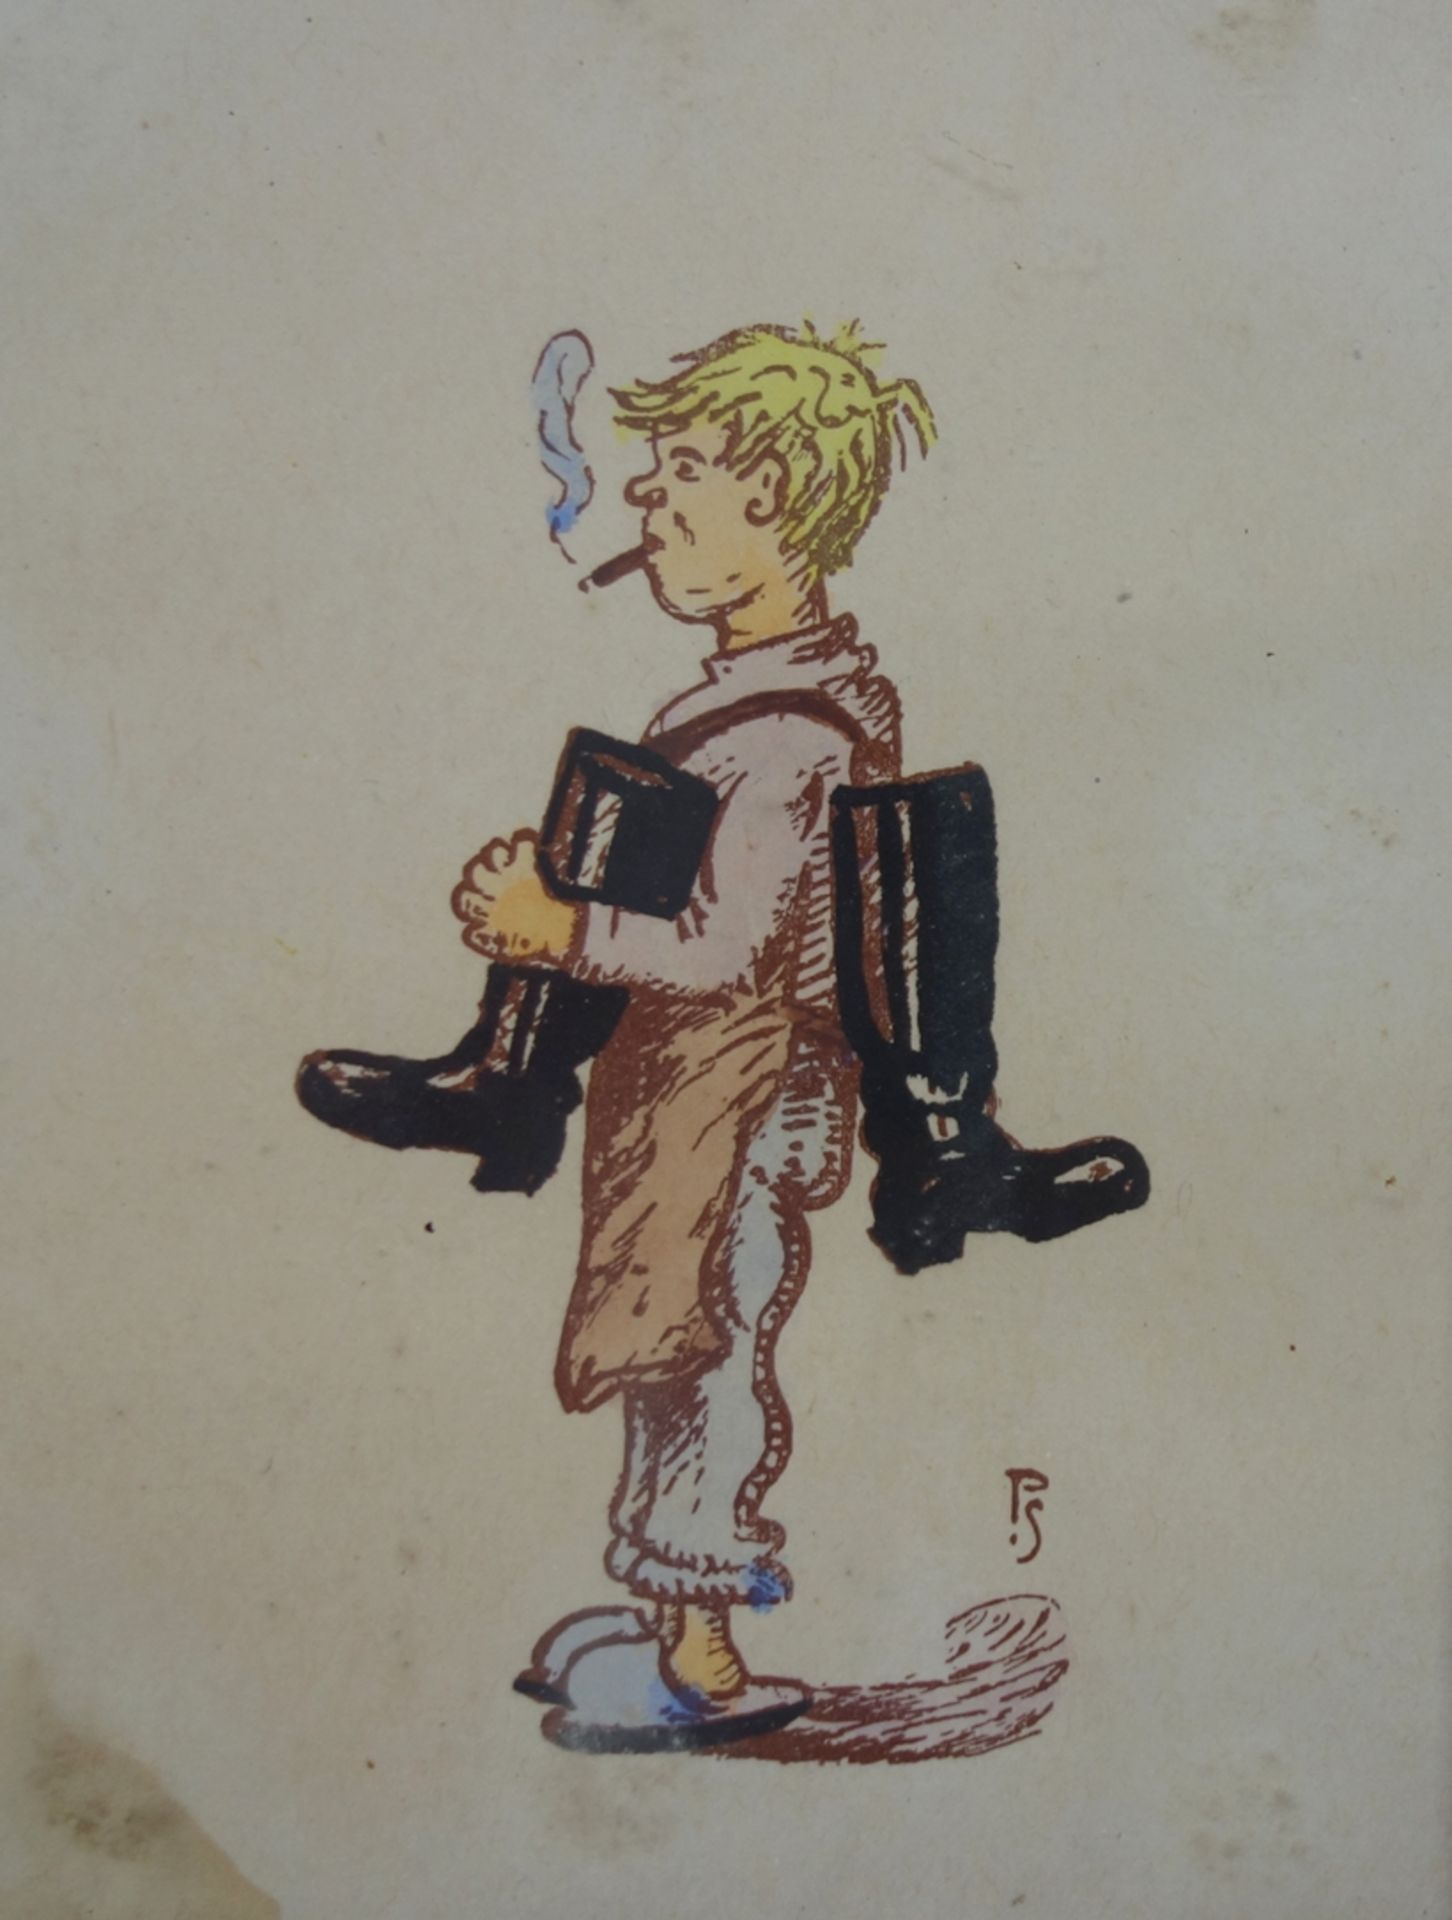 Karikaturist PS "Schusterjunge", kolorierte Lithografie, um 1930, u.r. monogram